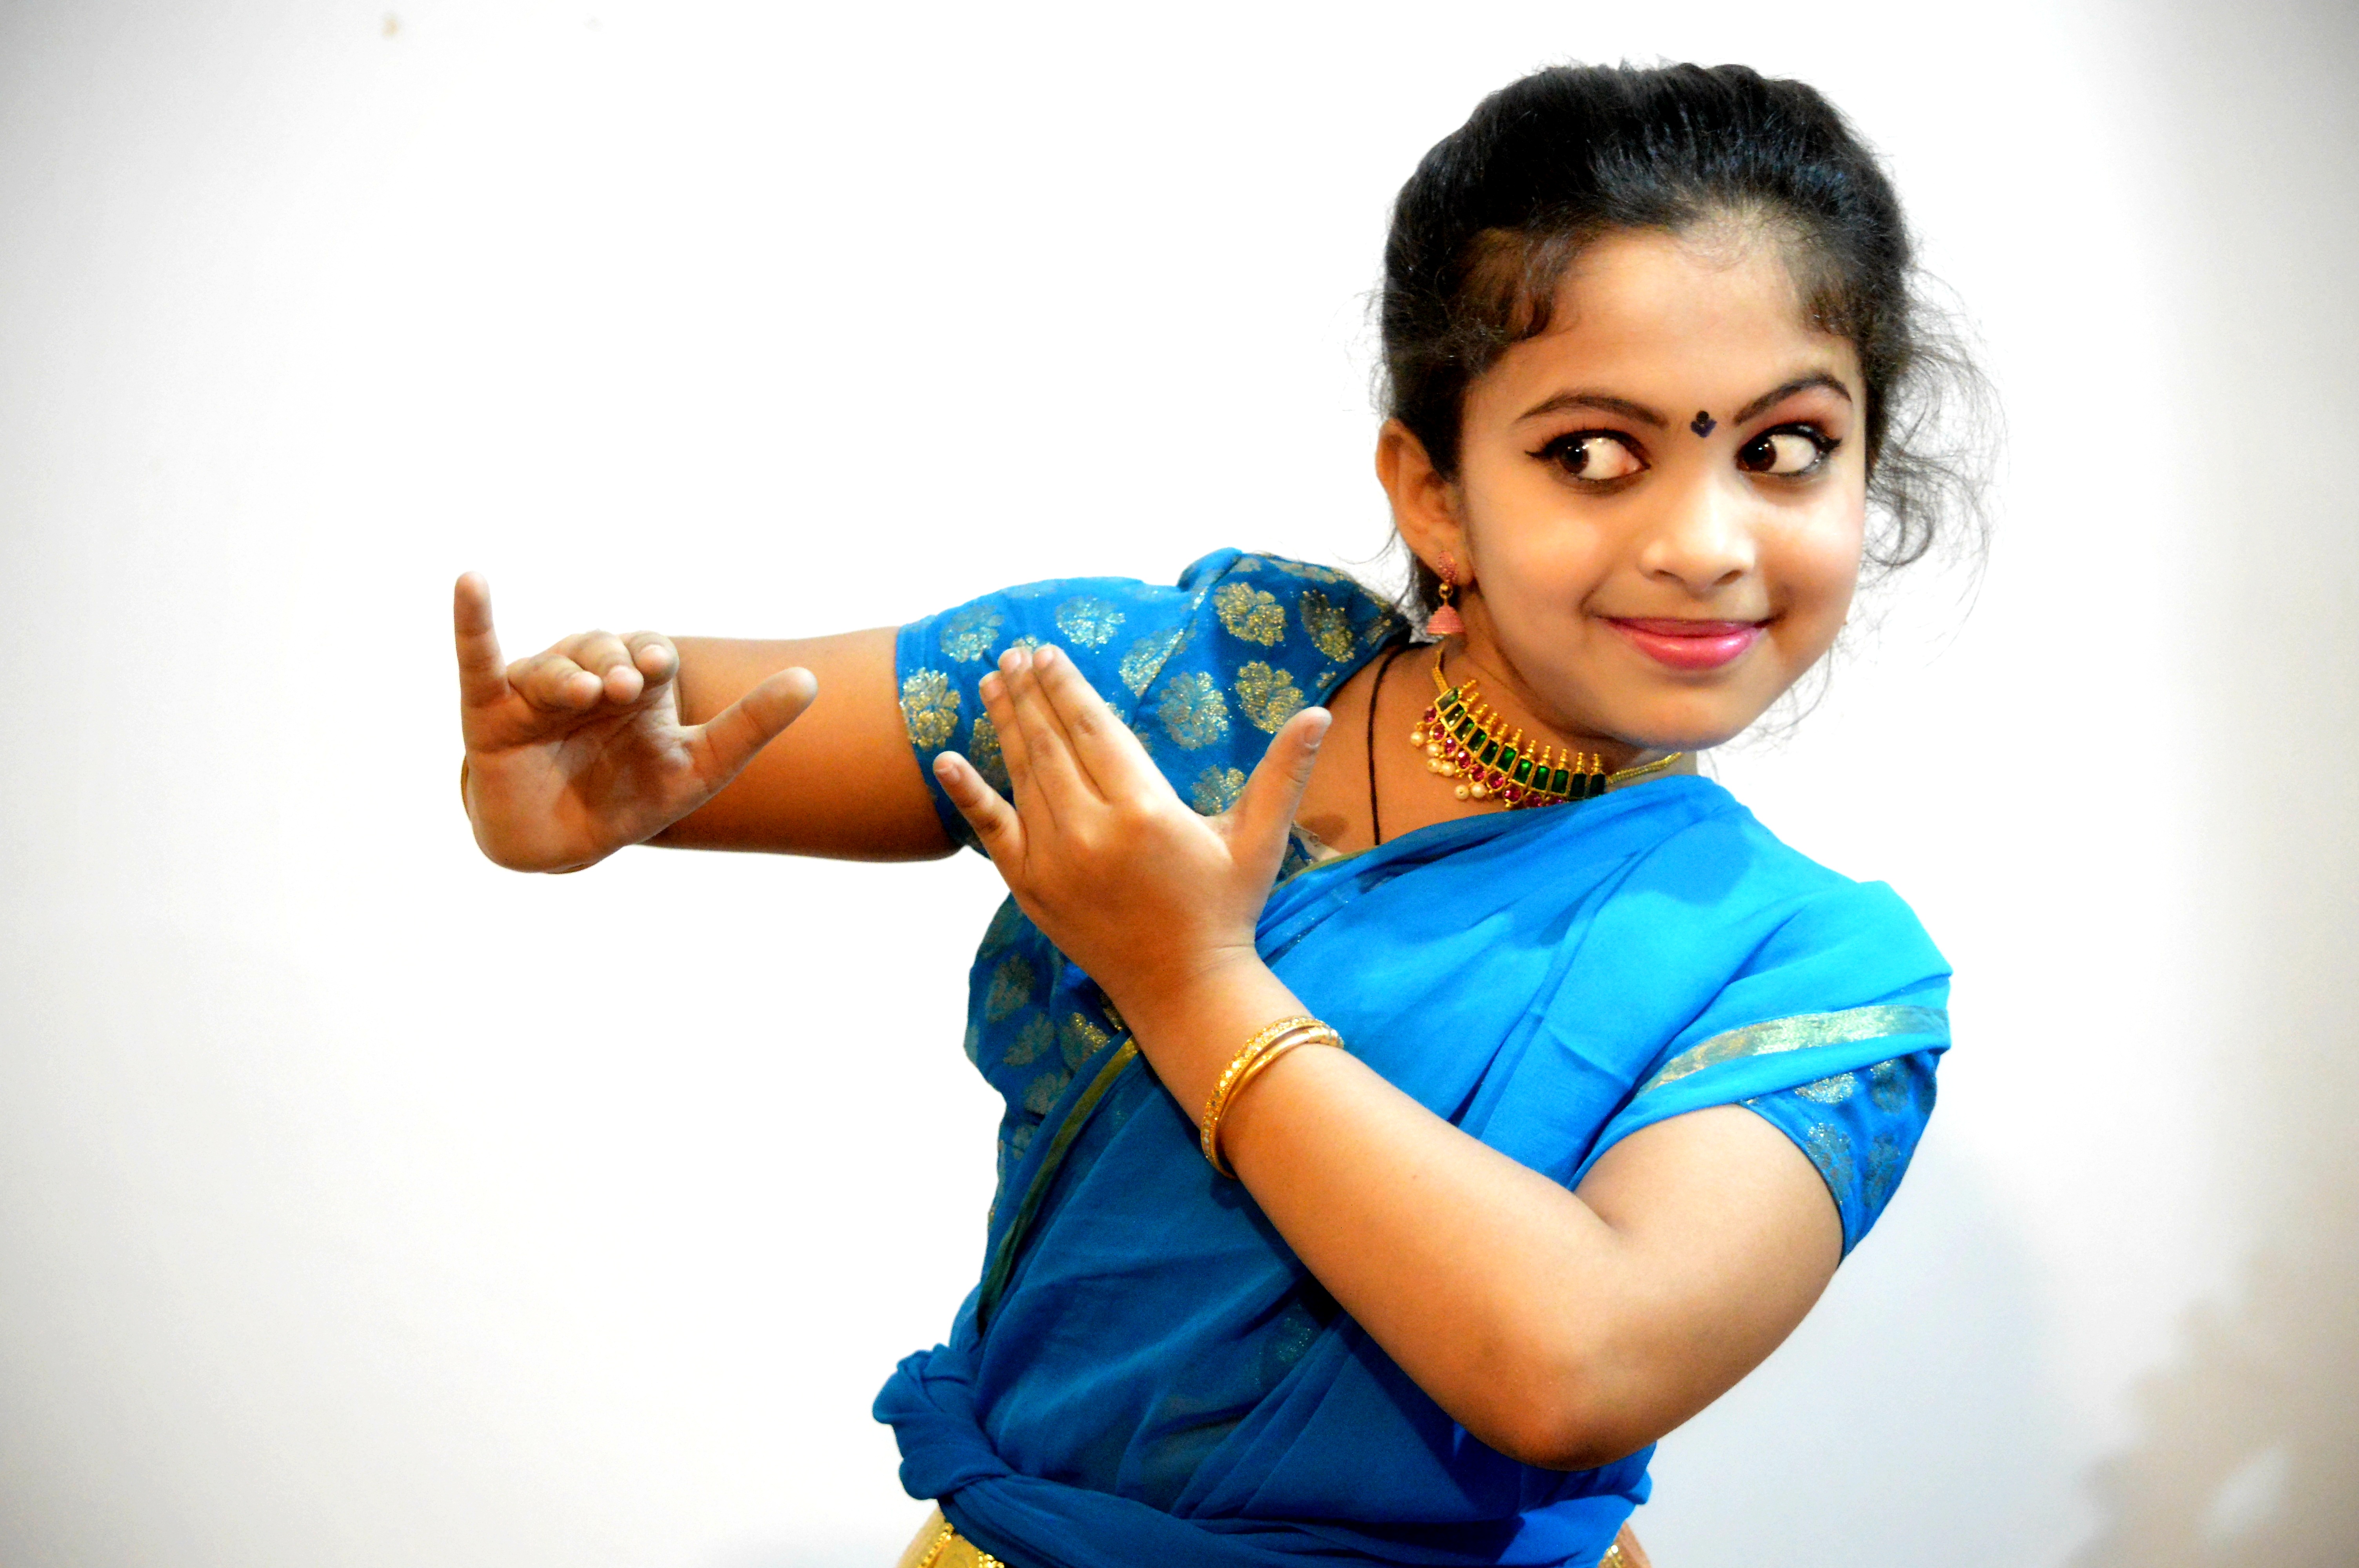 bharatanatyam dance pose (Art) by WIZBA on DeviantArt